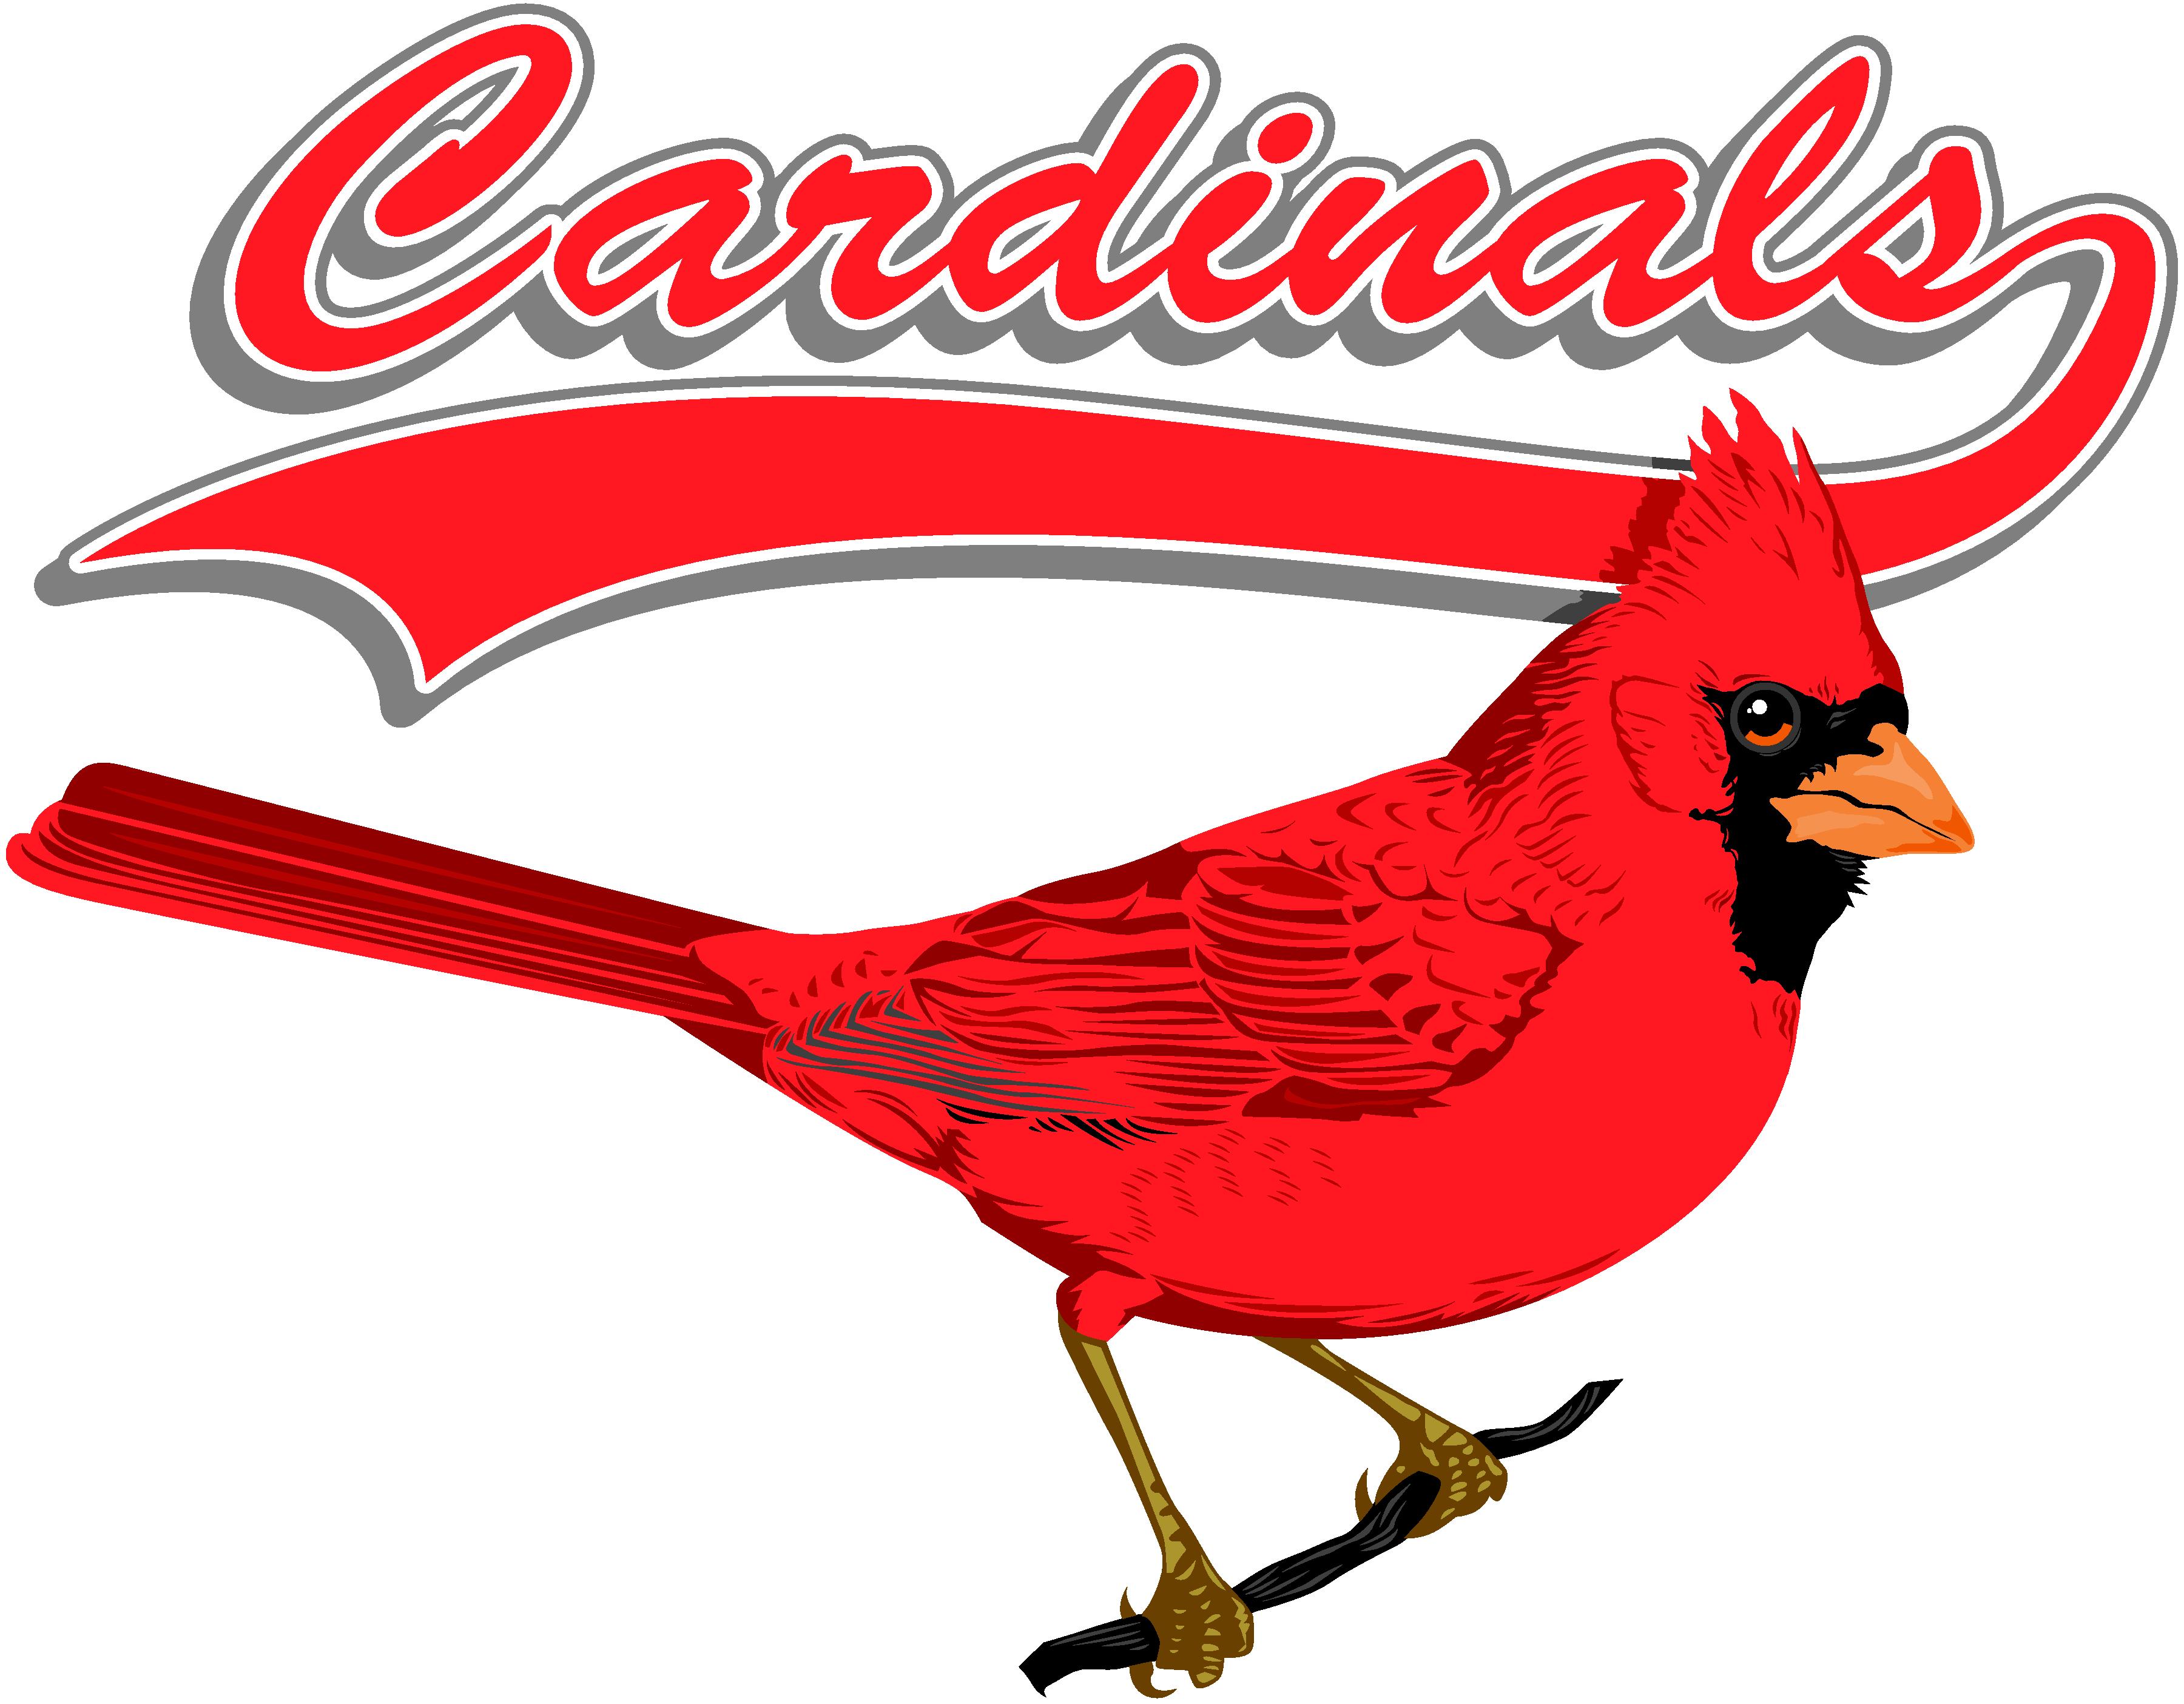 Cardinals World Series Tickets Cheap Concert Tickets Slashes St. Louis